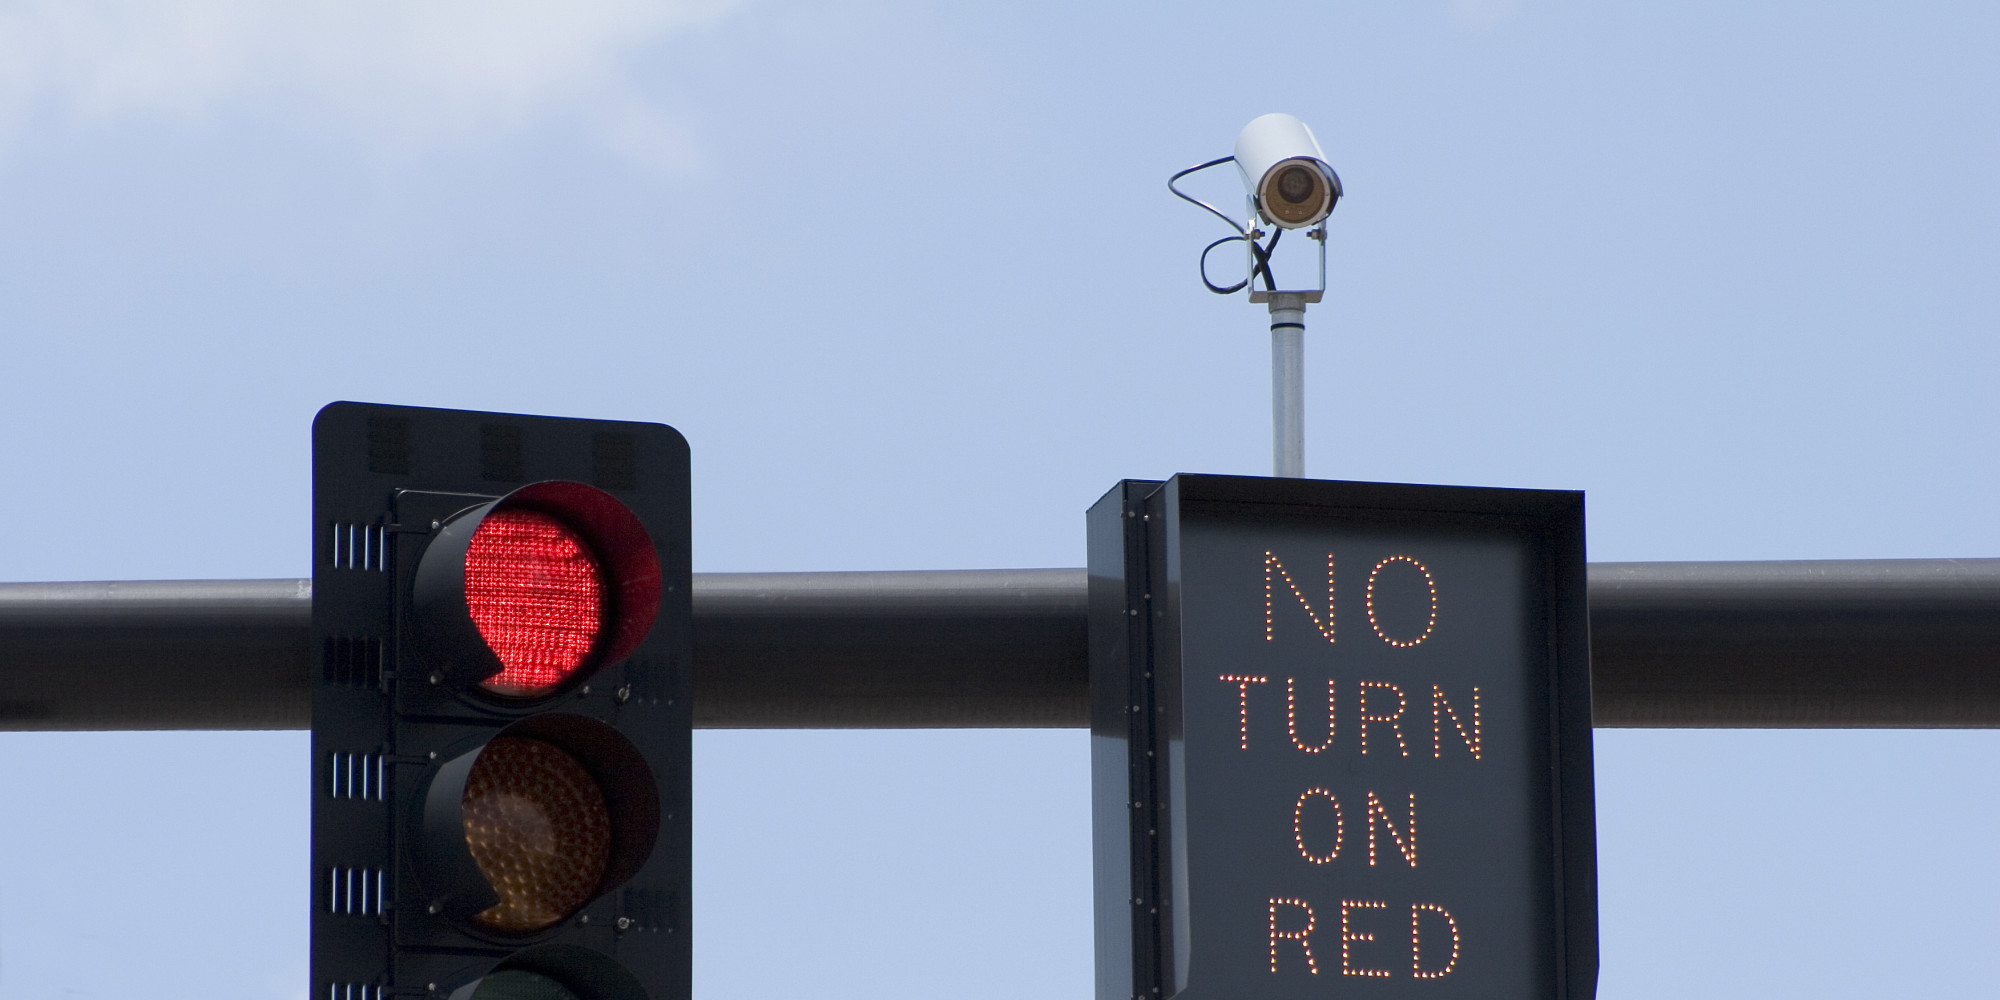 do all traffic lights have cameras